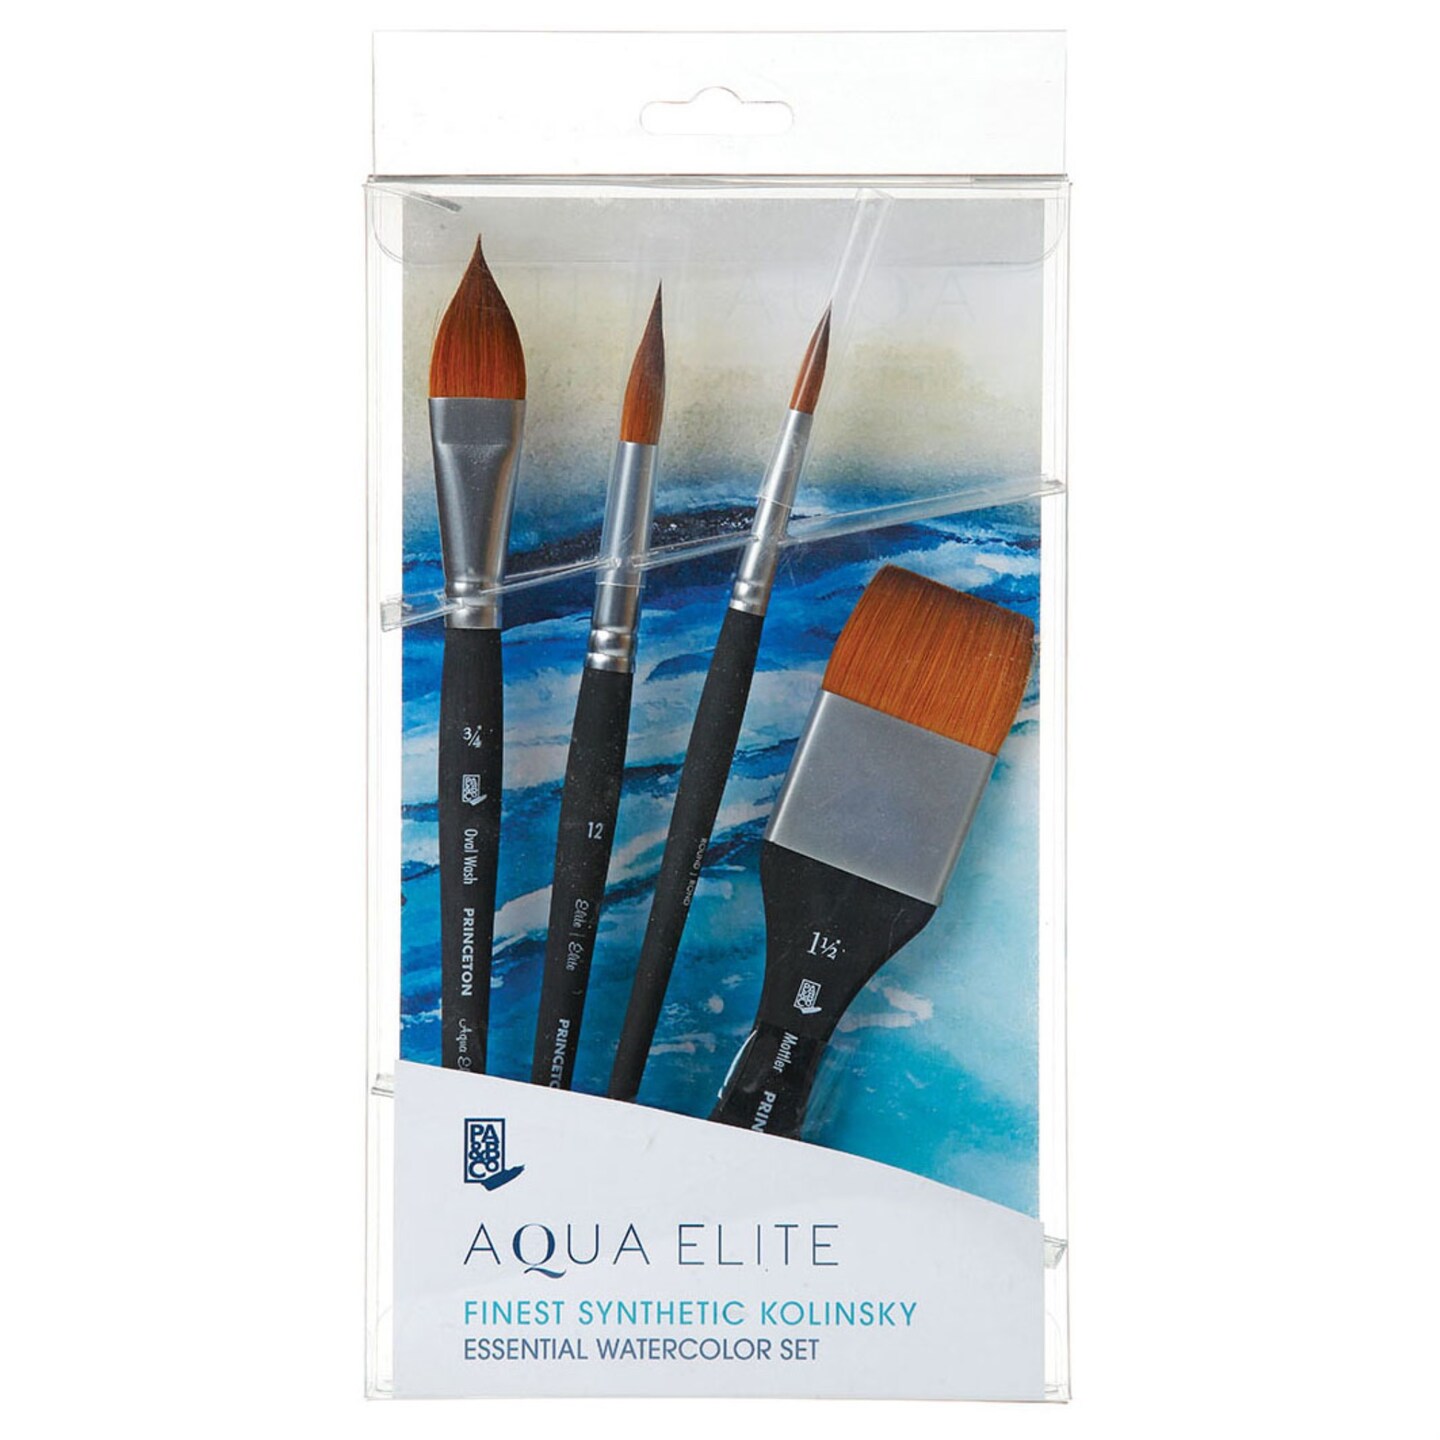 Princeton Aqua Elite, Series 4850, Synthetic Kolinsky Watercolor